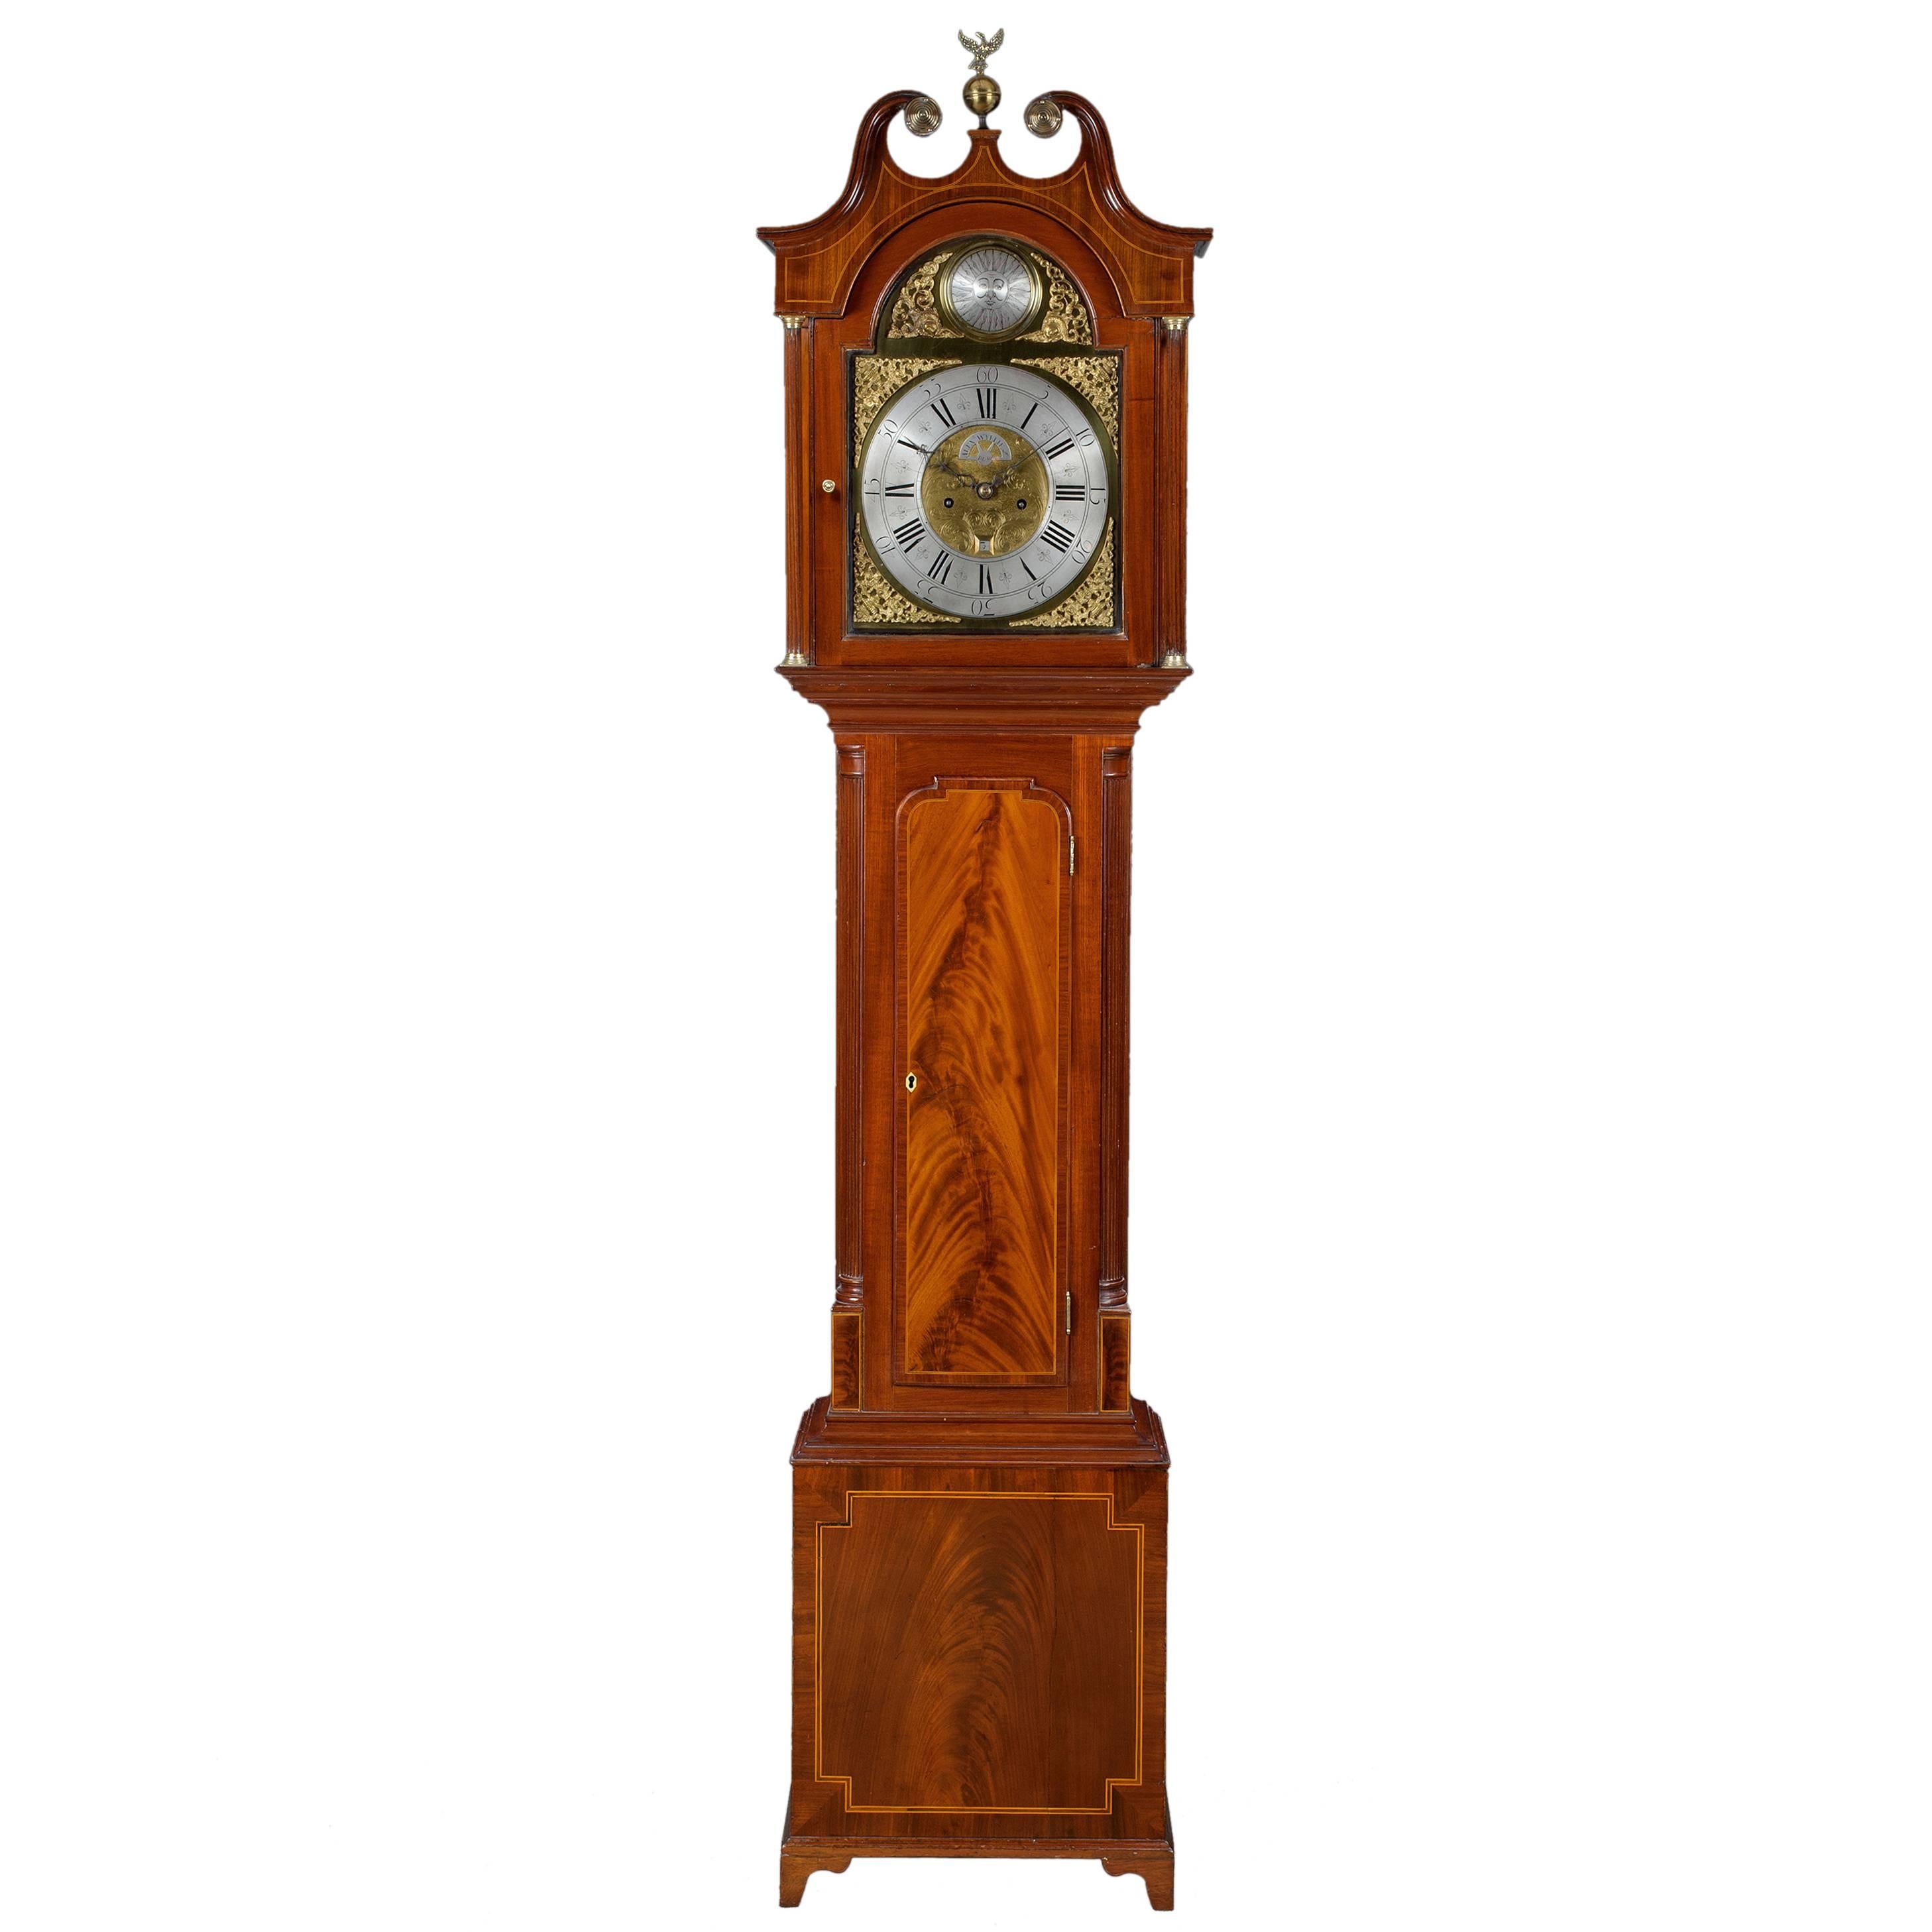 George III Mahogany and Inlaid Scottish Longcase Clock